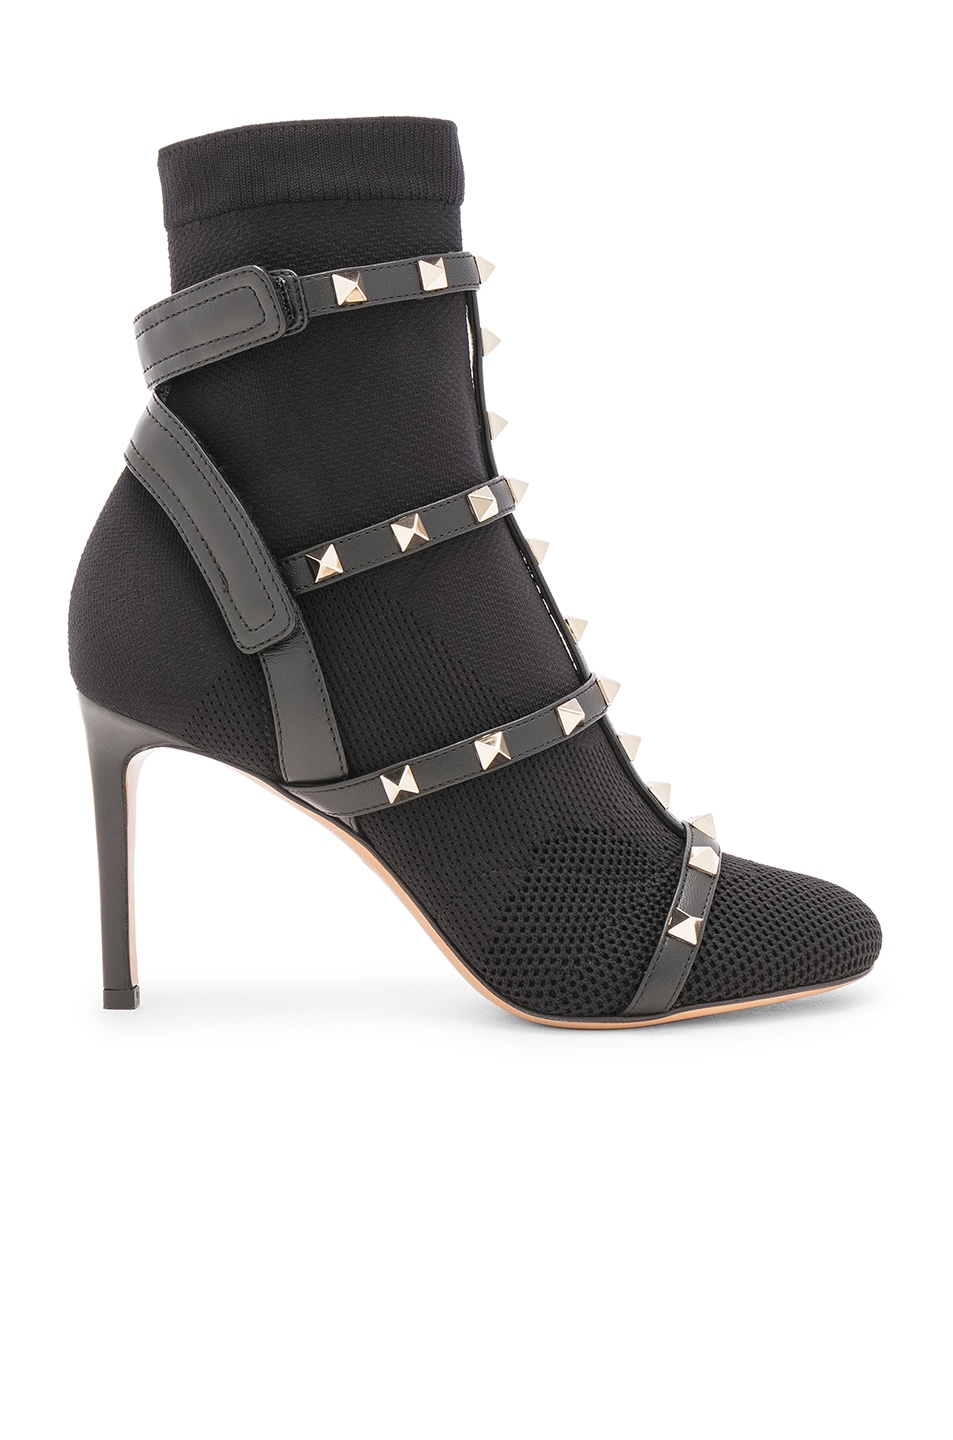 Valentino Garavani Rockstud Bodytech Caged Ankle Boots in Black | FWRD